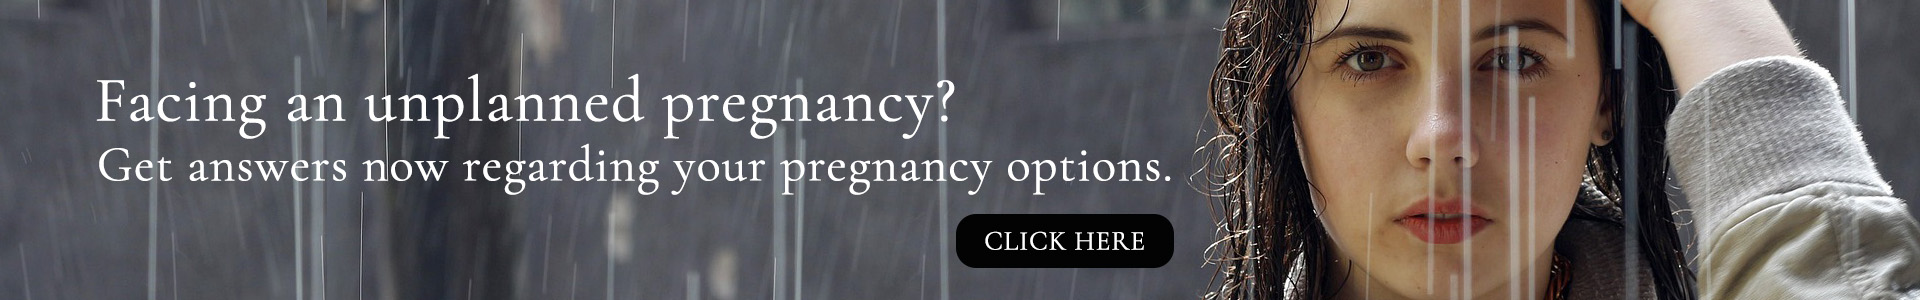 Pregnant? Need Help? Visit Options-AZ.org